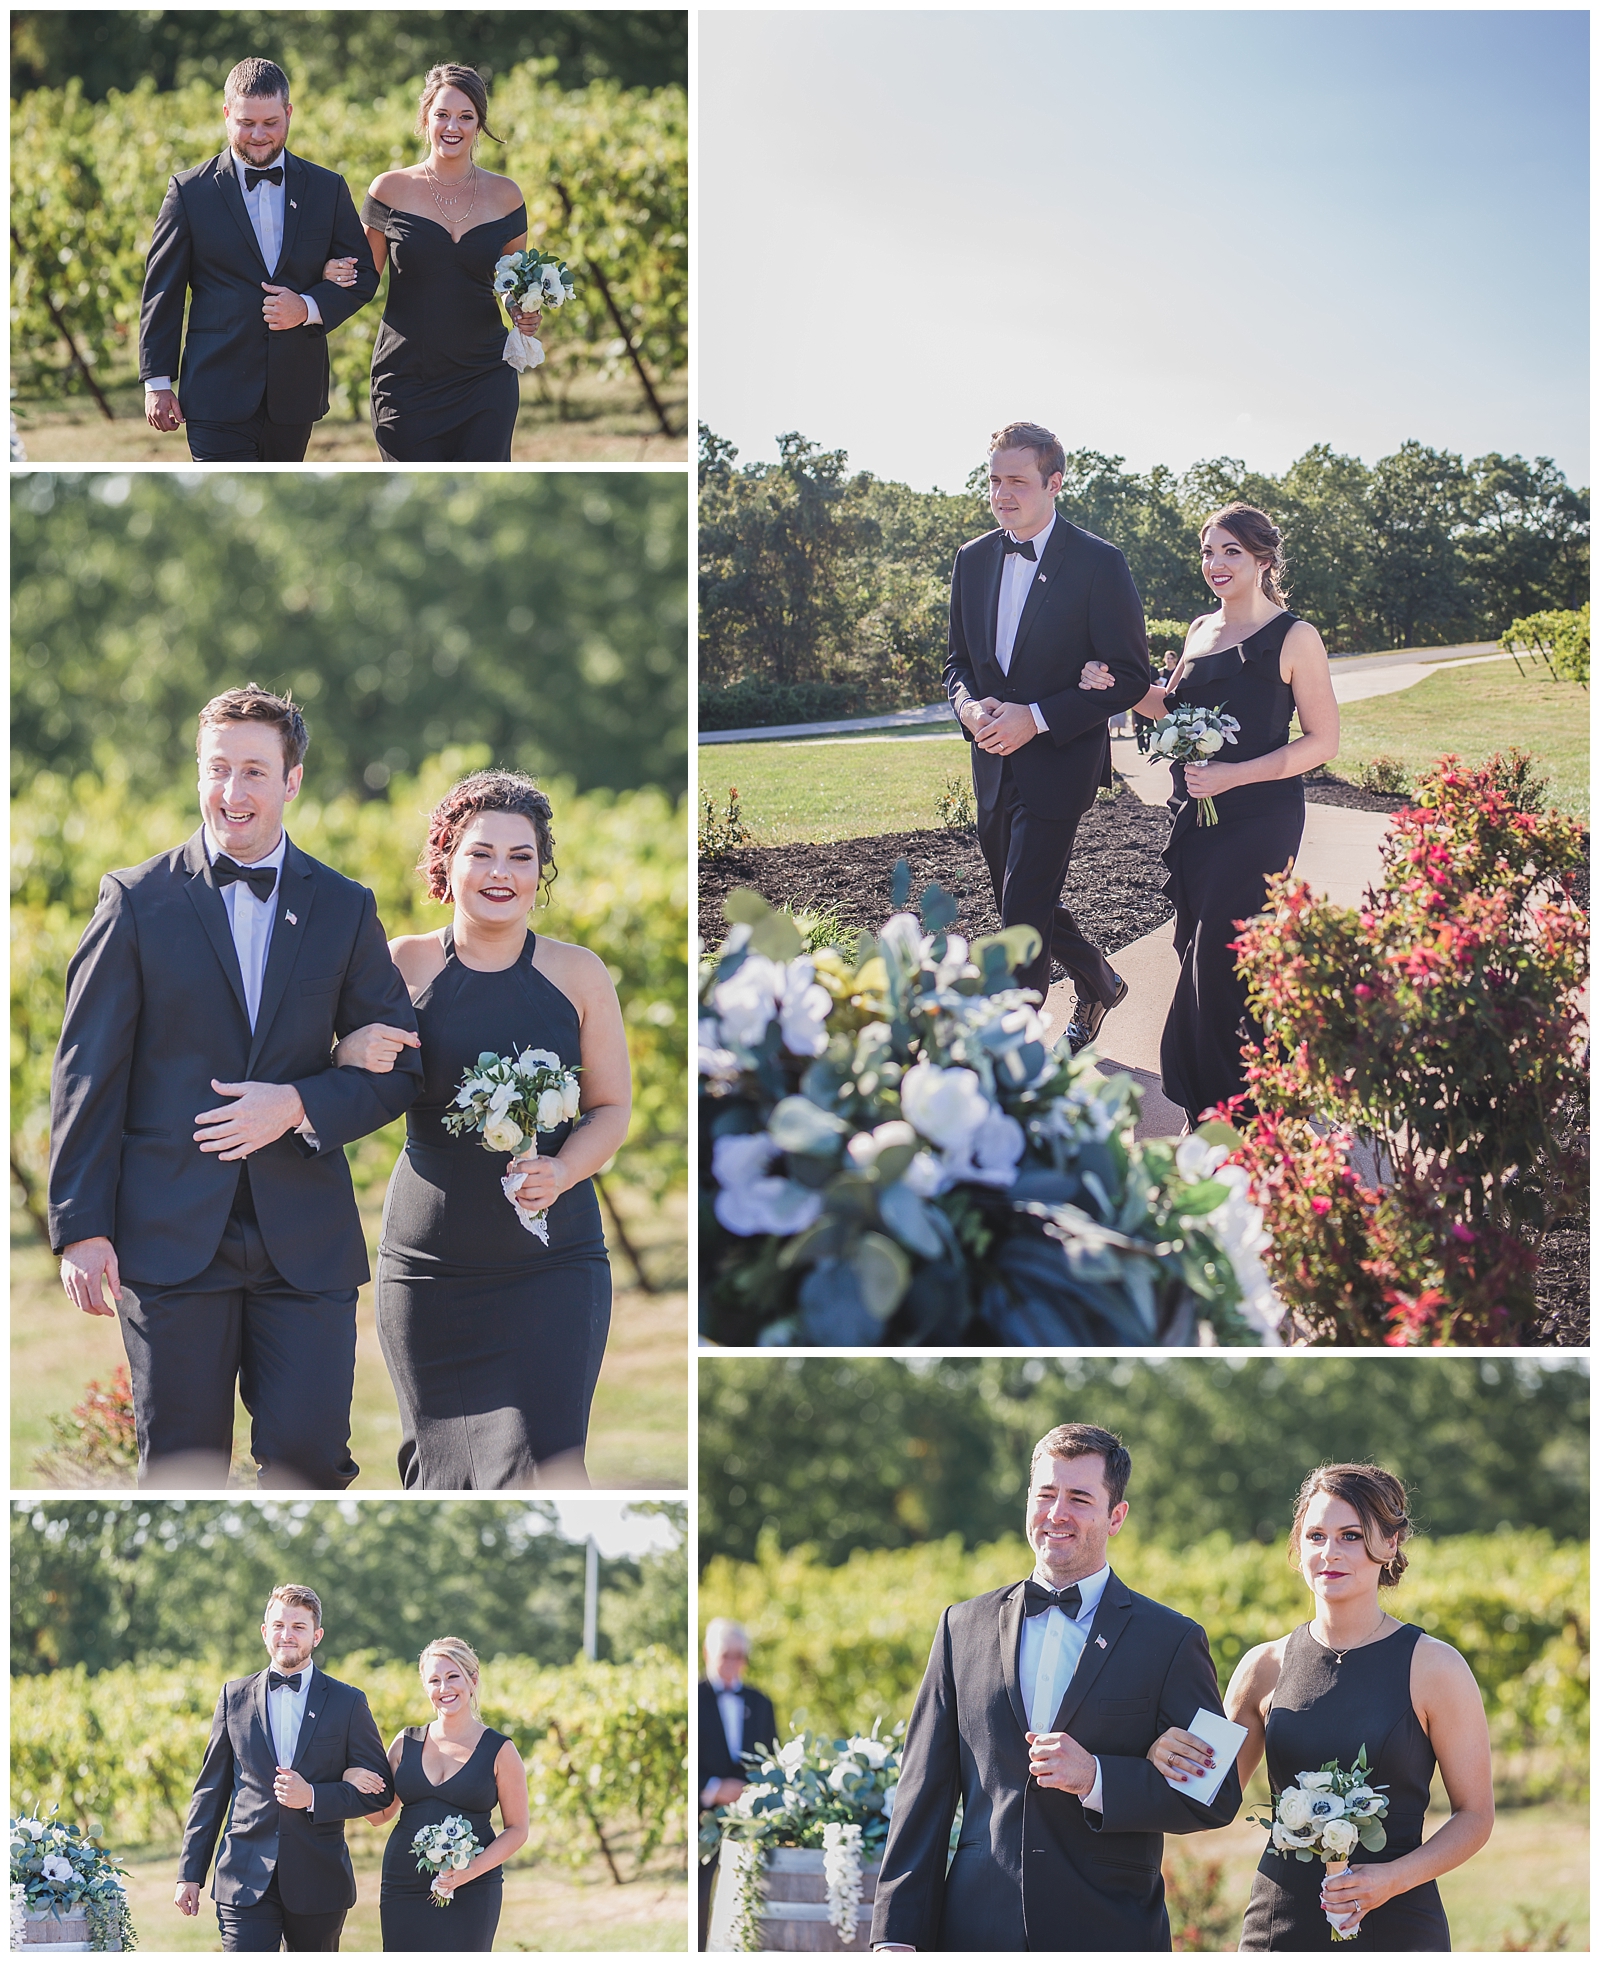 Wedding photography at Seven Springs Winery in Linn Creek, Missouri, by Kansas City wedding photographers Wisdom-Watson Weddings.